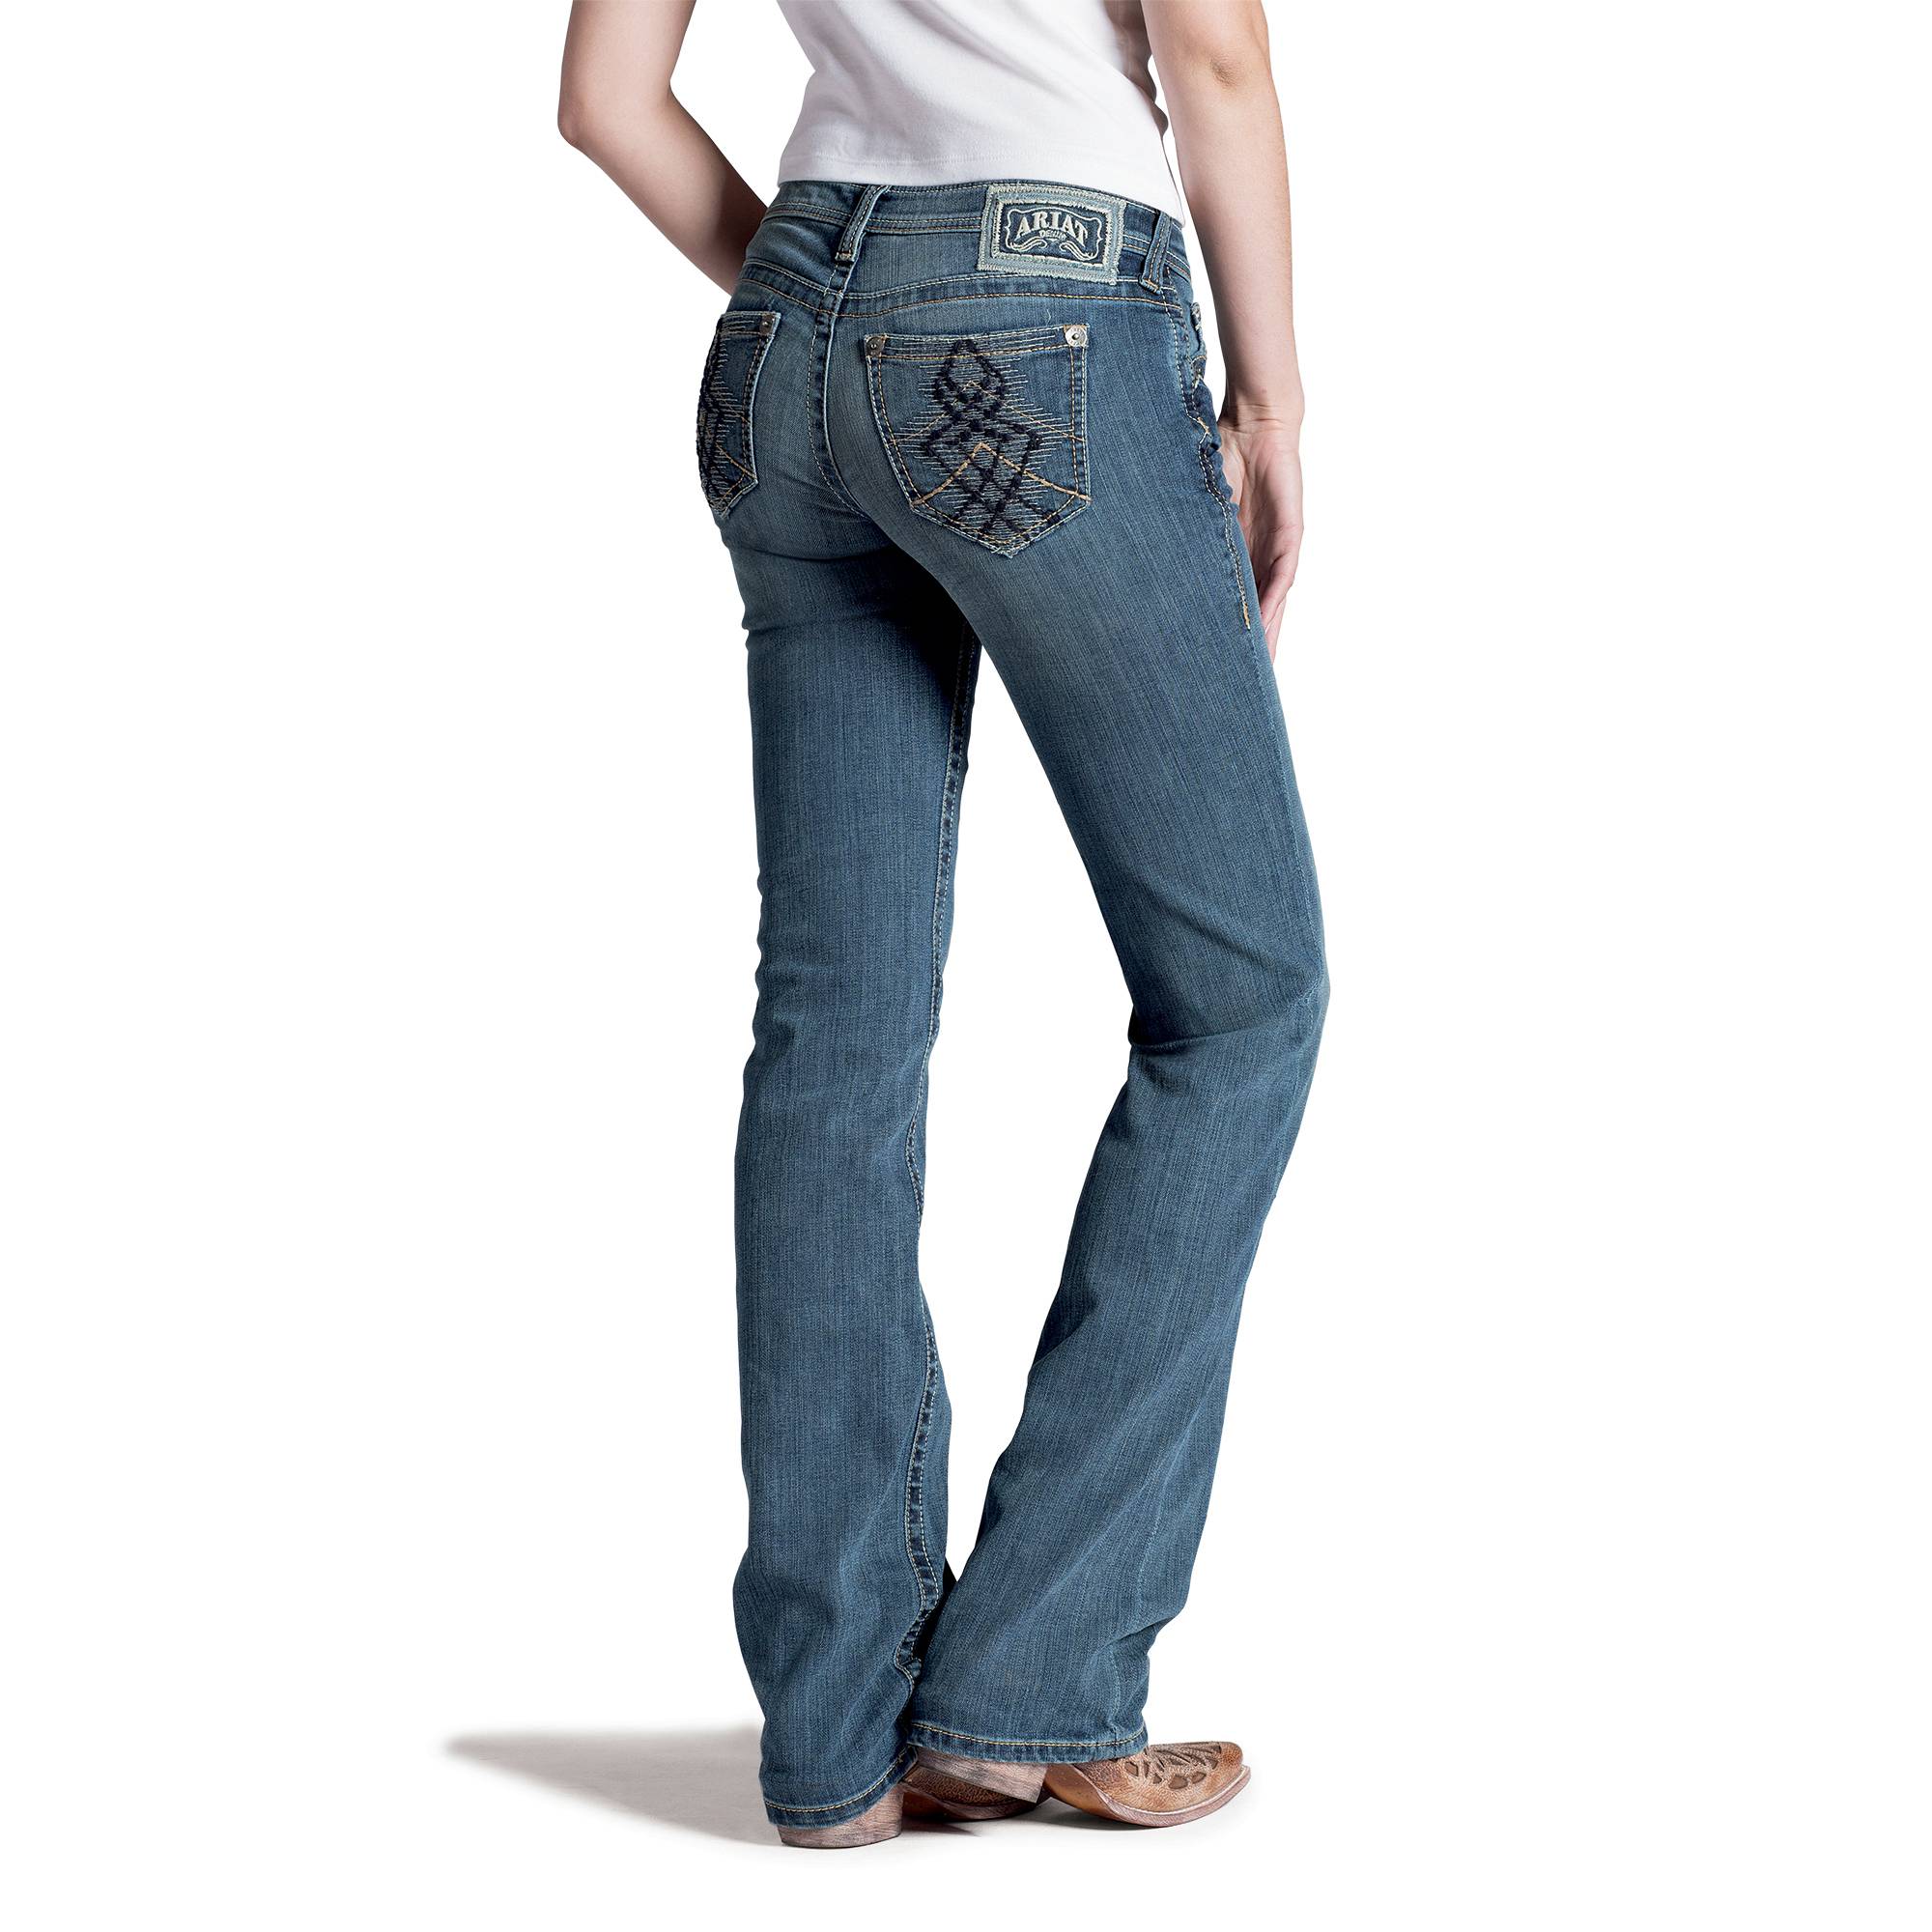 Ariat Amber Serpentine Jeans Ladies Lonestar